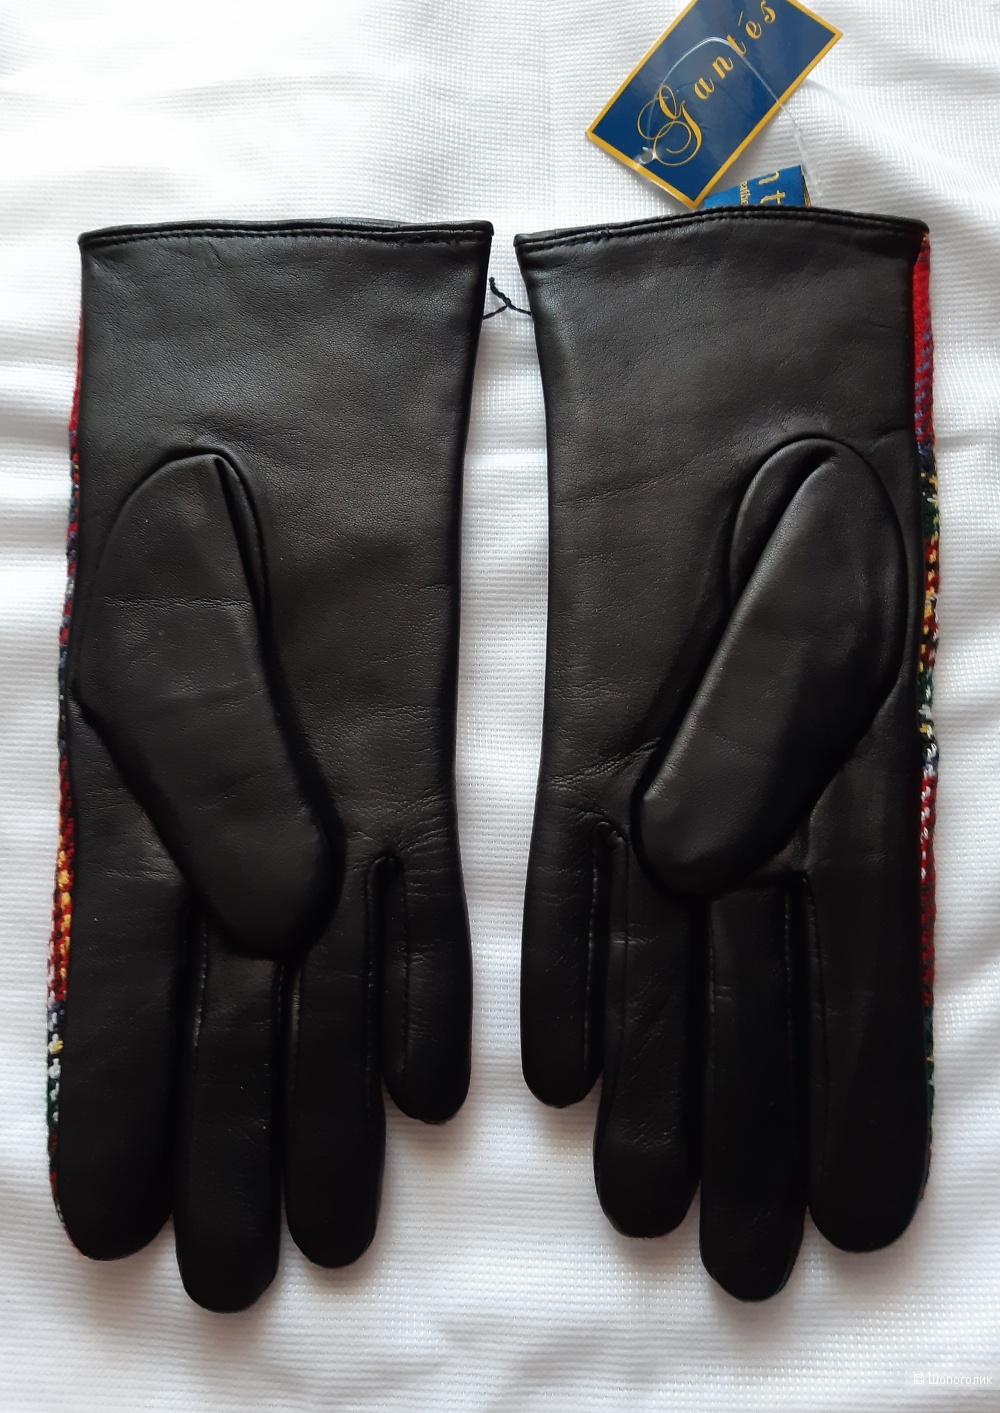 Перчатки Gantes, размер 6,5.